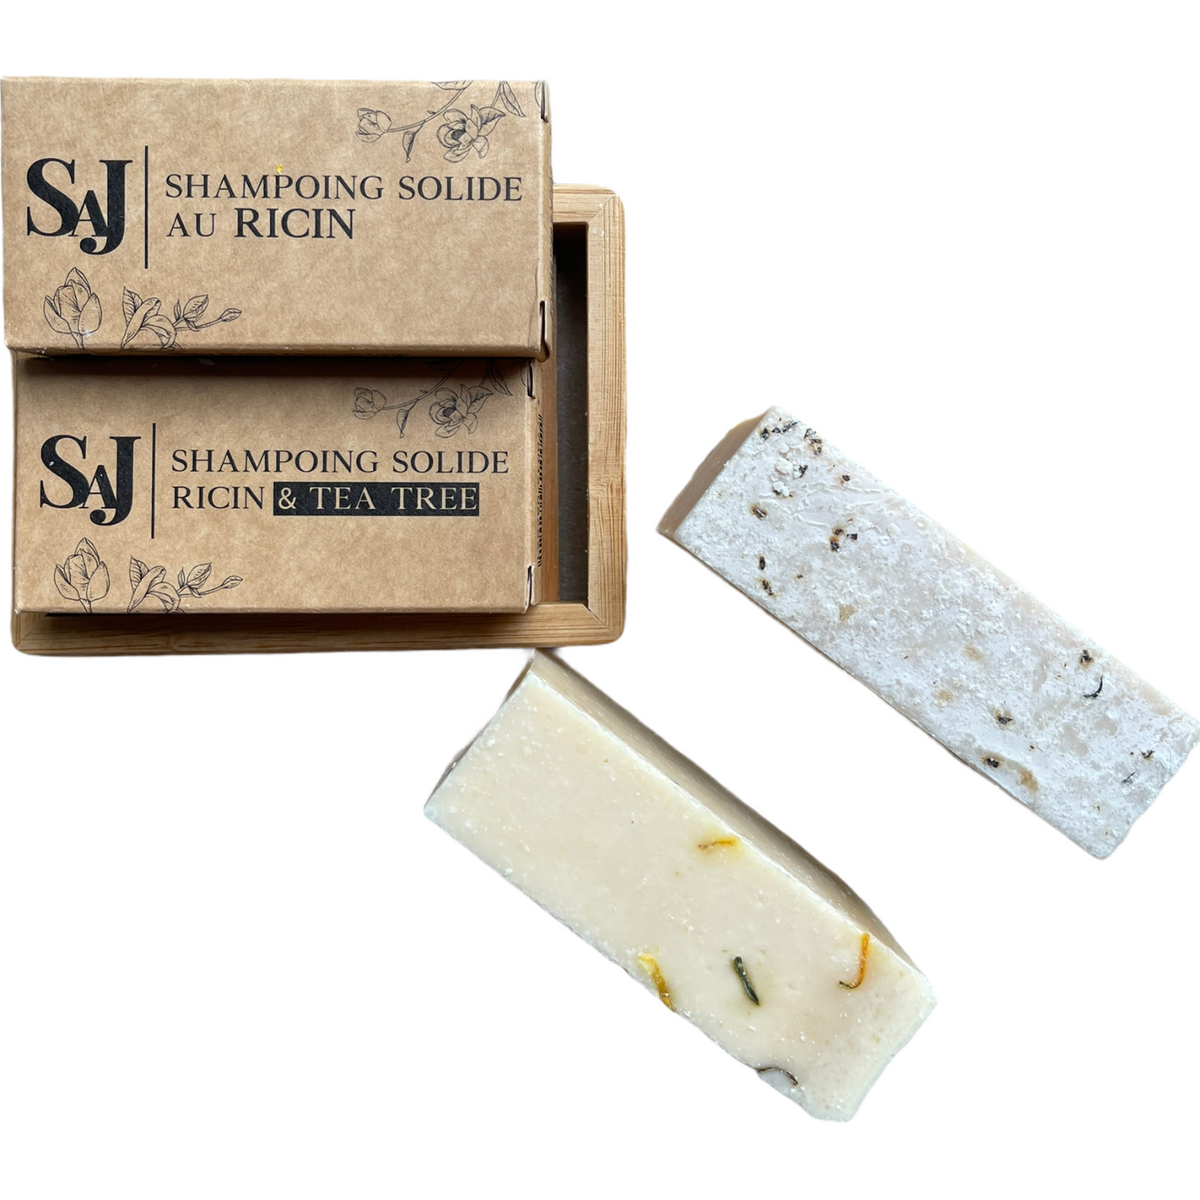 savon jura organic soap and shampoo gift set 